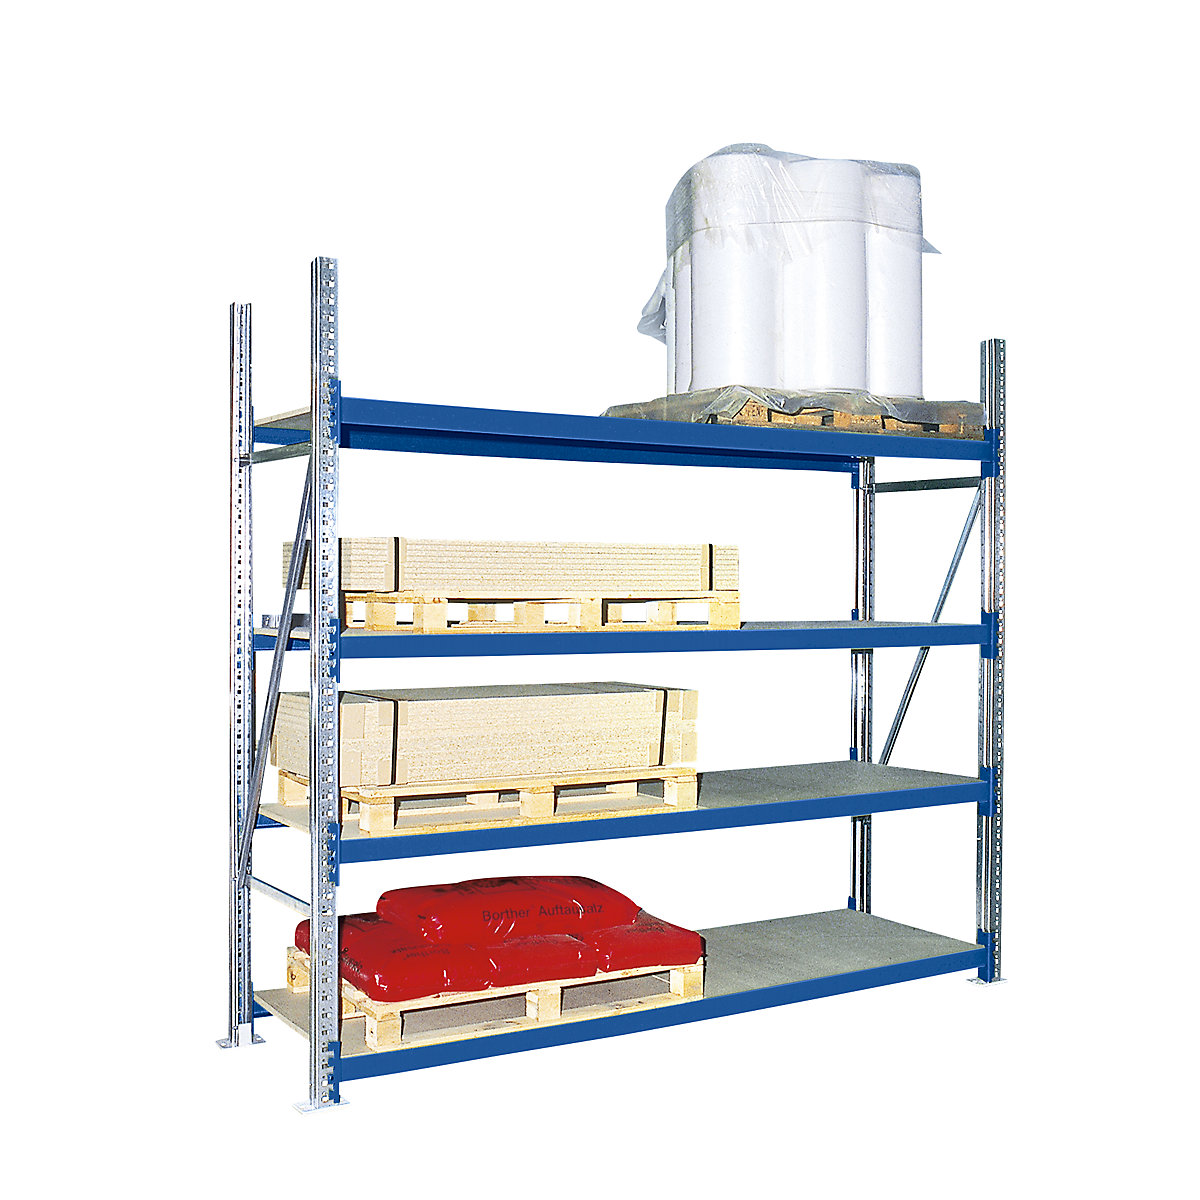 Wide span shelving unit with moulded chipboard shelves – eurokraft pro, depth 800 mm, cross beam length 1800 mm, height 2500 mm, standard shelf unit, blue RAL 5010